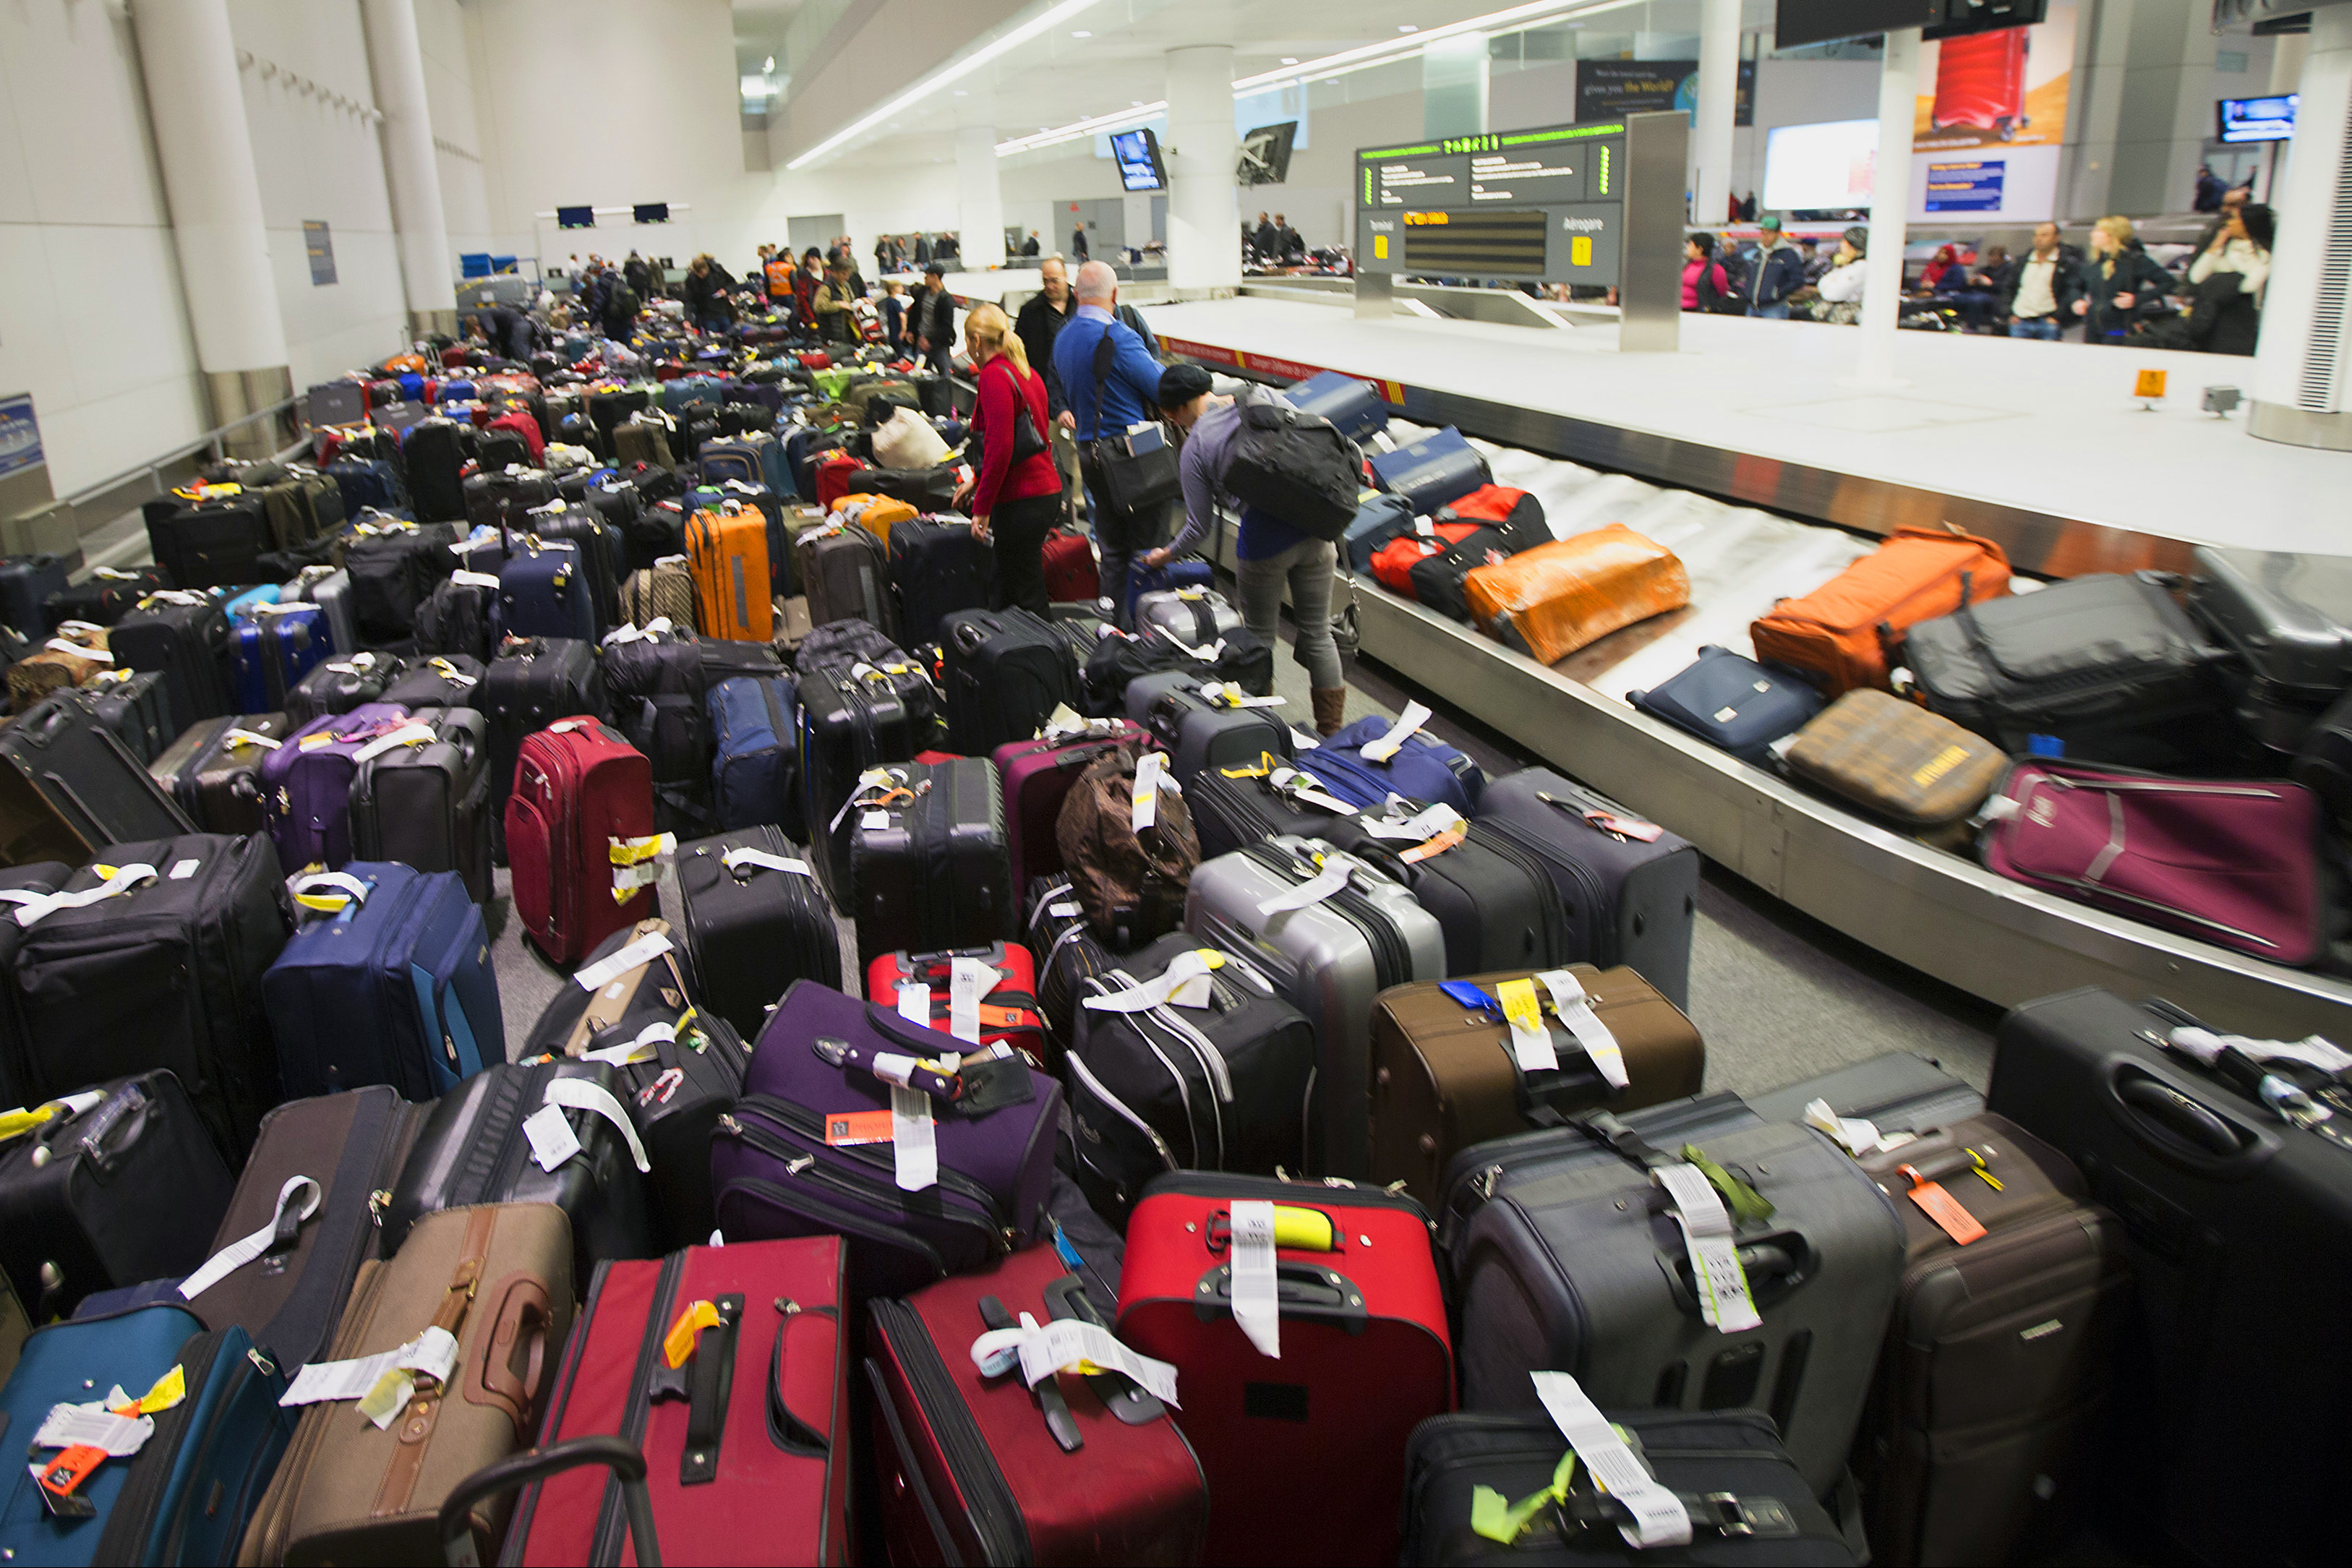 air canada reimbursement delayed baggage